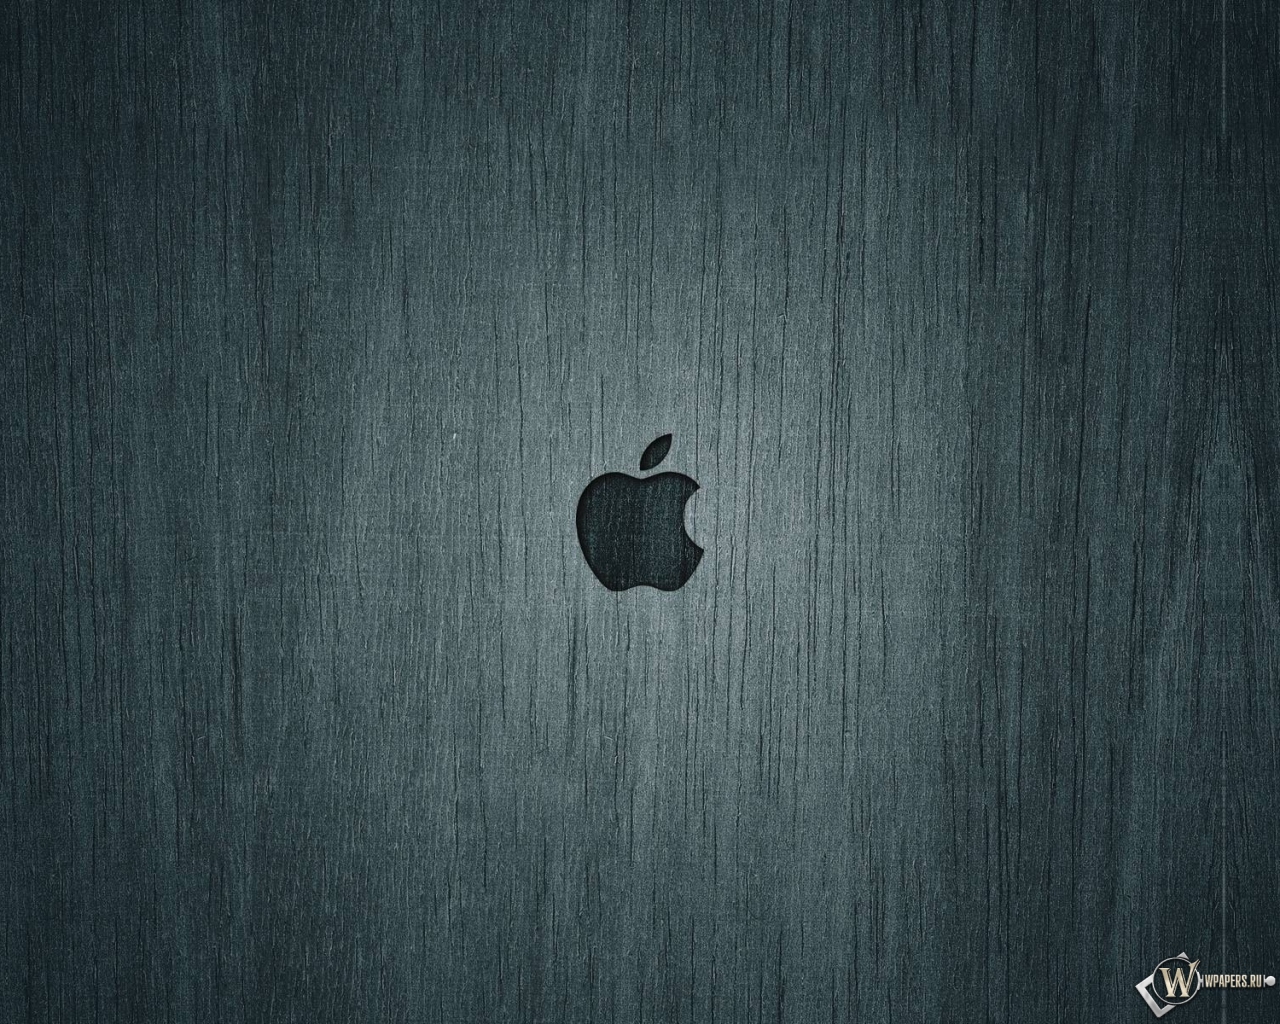 Apple 1280x1024